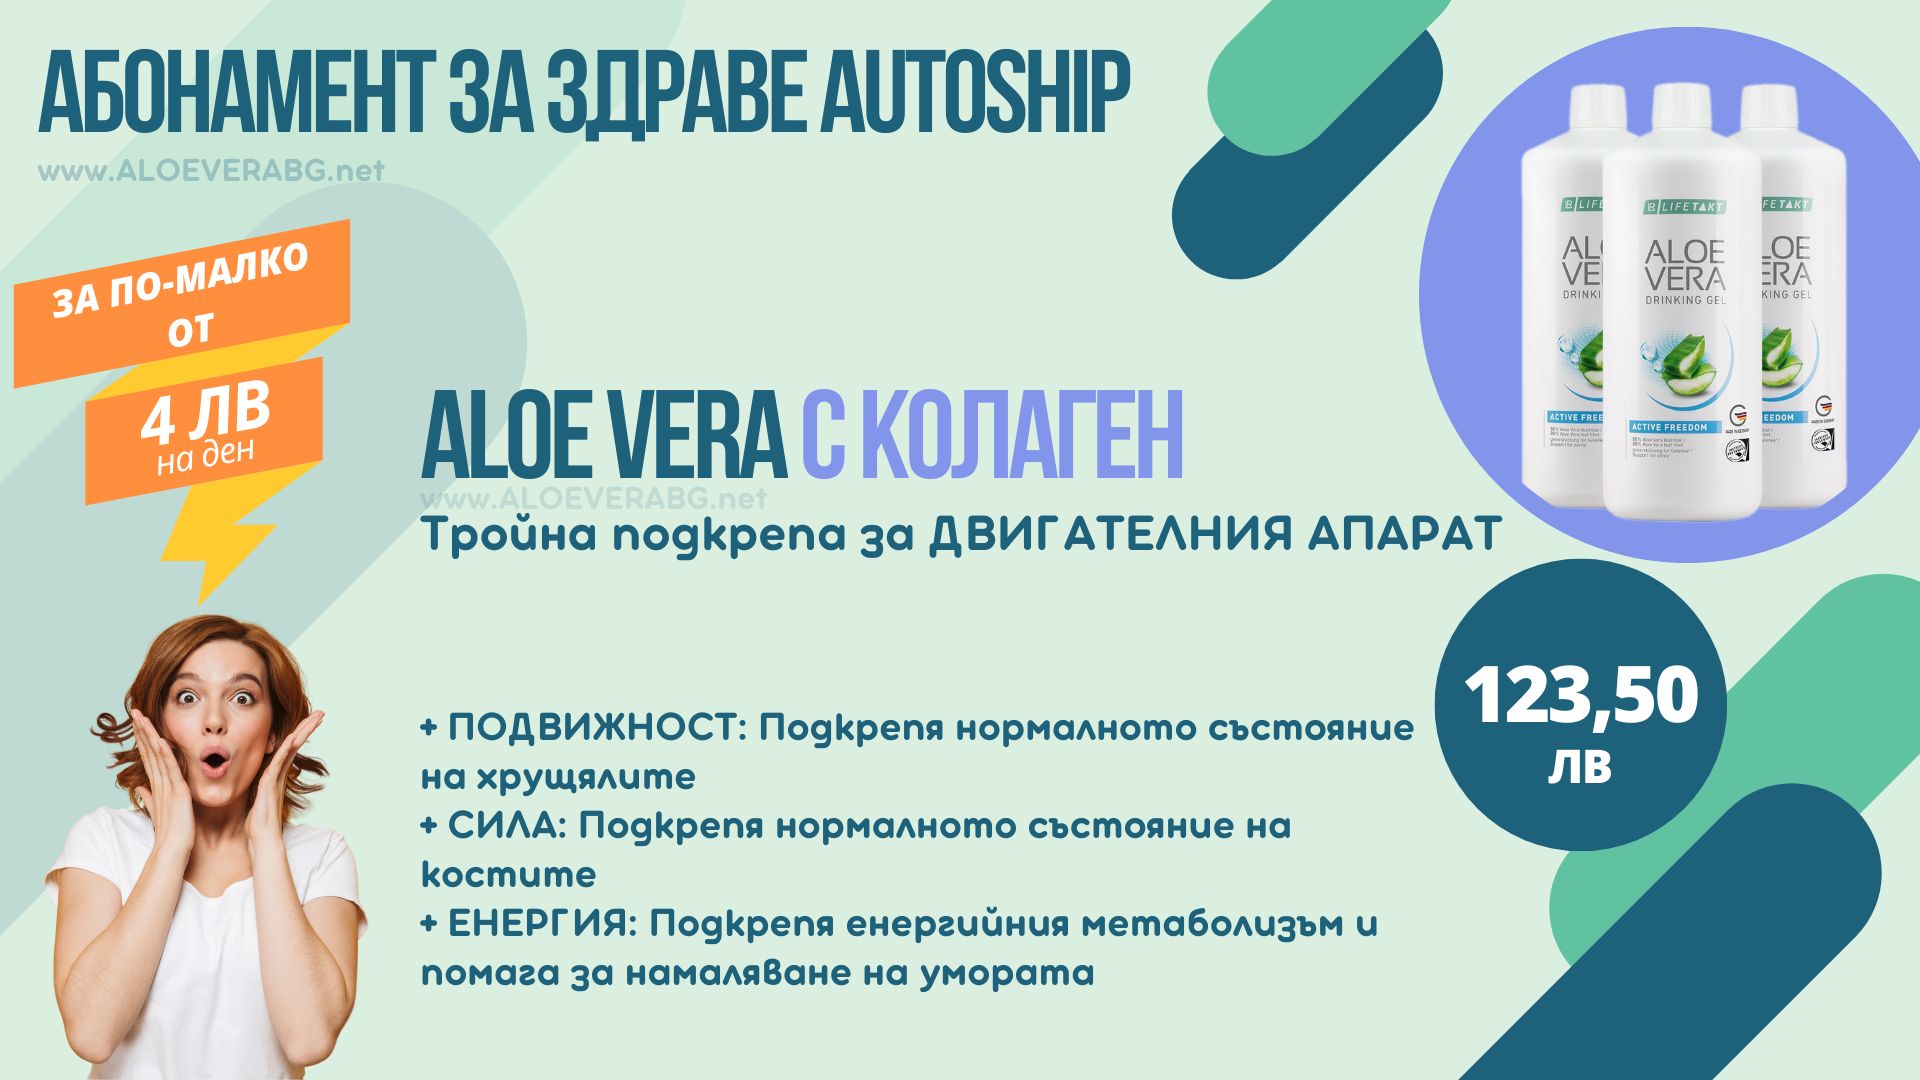 LR Autoship Aloe Vera Active Freedom Абонаментна програма за НАЙ-ИЗГОДНА ЦЕНА!